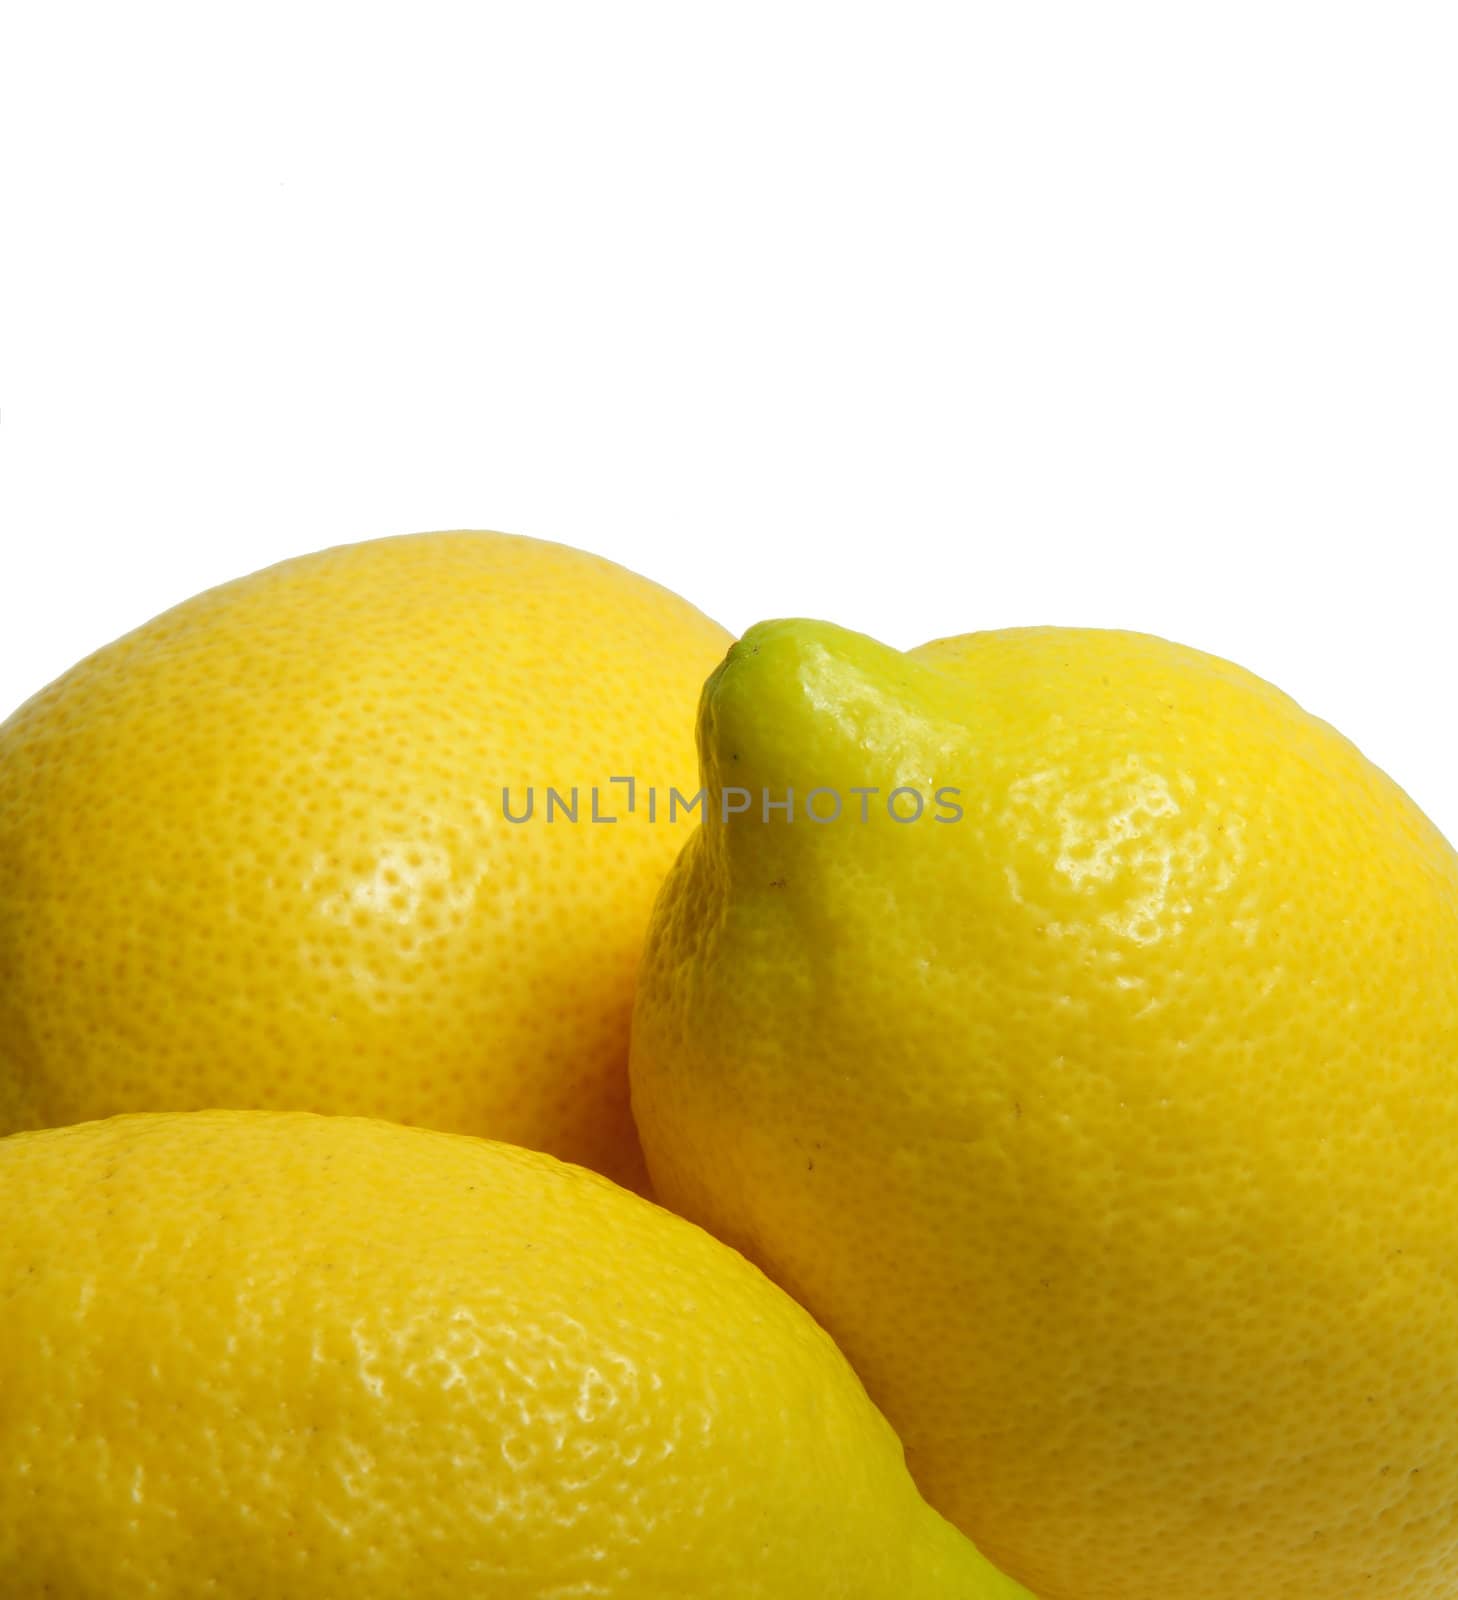 Multiple lemons on a light colored background